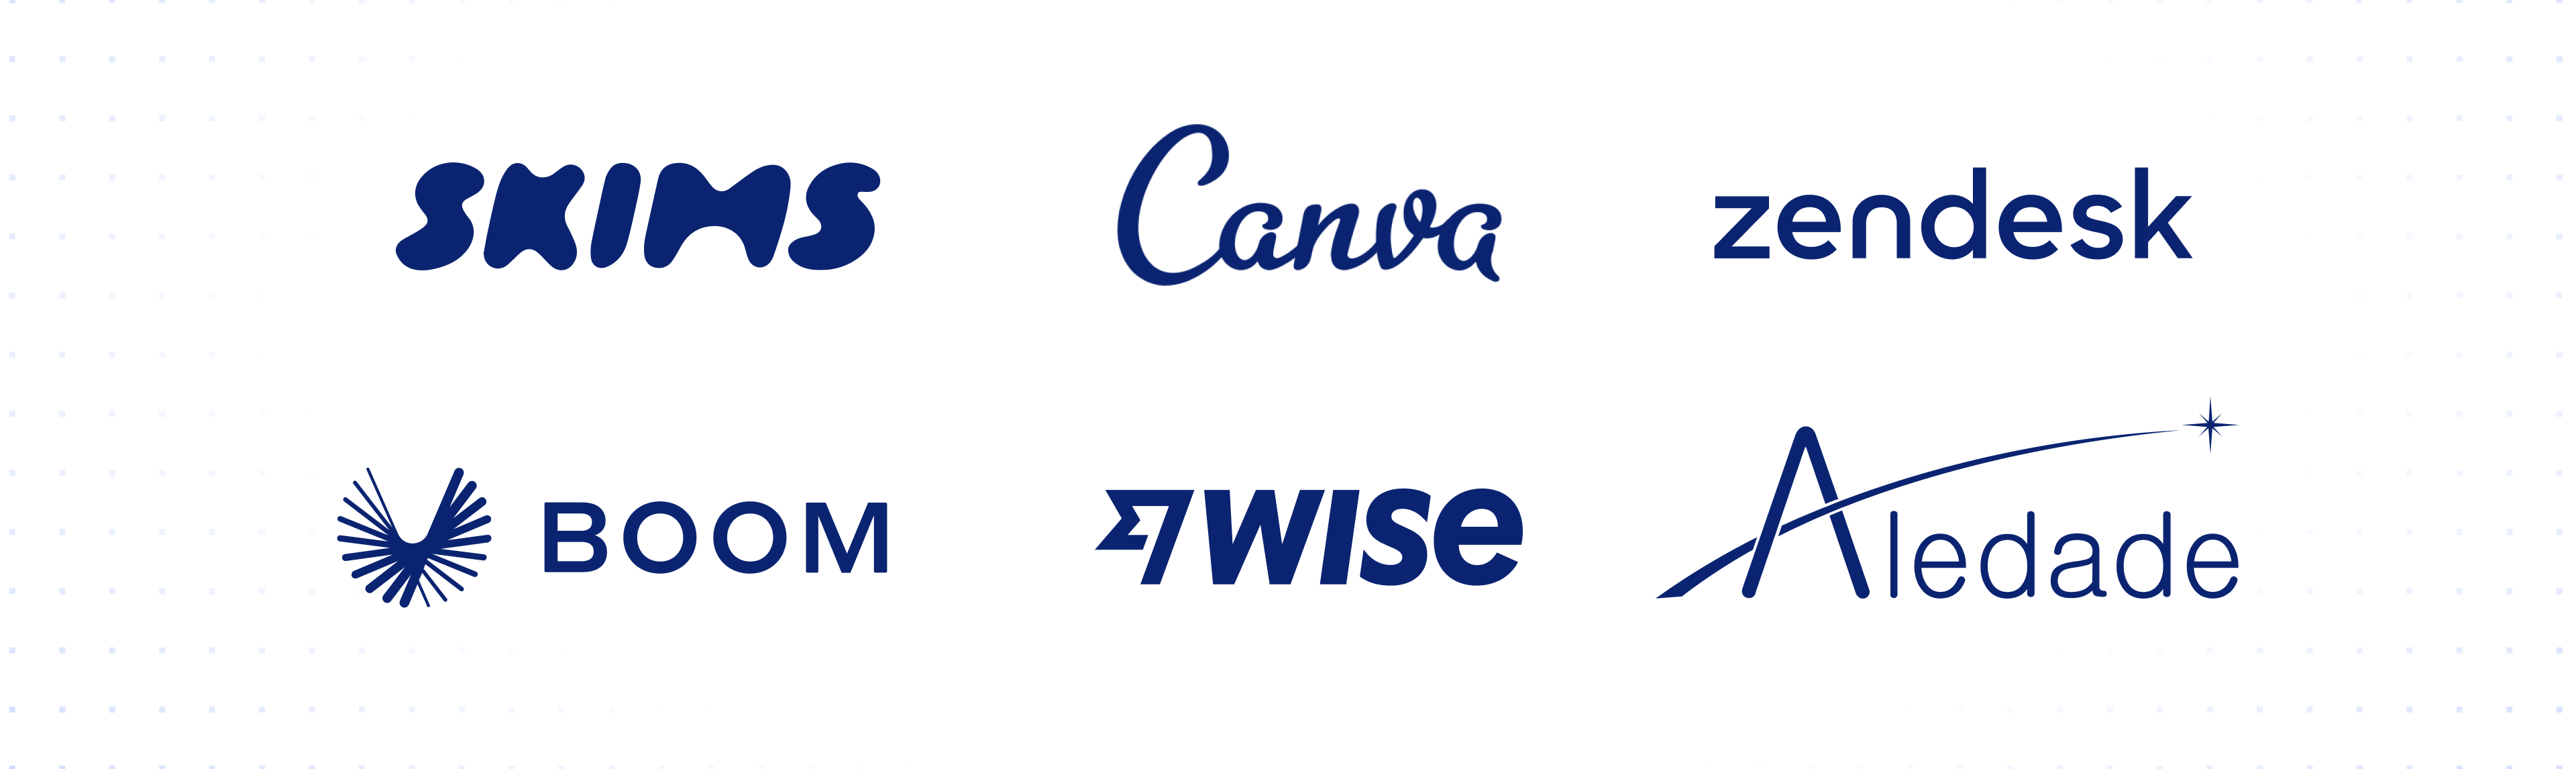 logos: Skim, Canva, Zendesk, Boom, Wise, Aledade